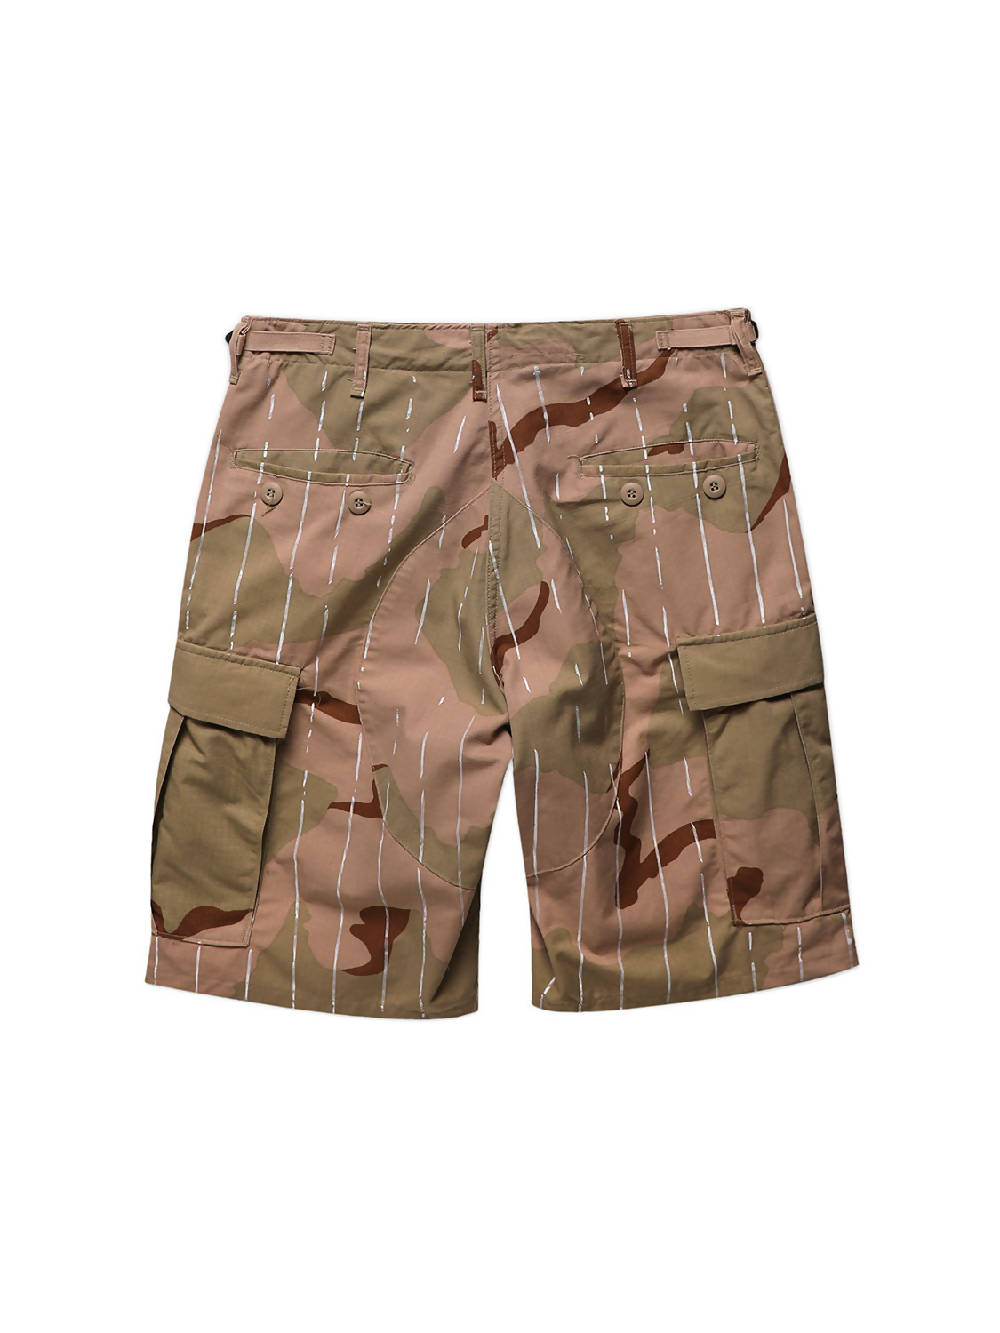 Myar Camo Ussrt90 Us Army Shorts